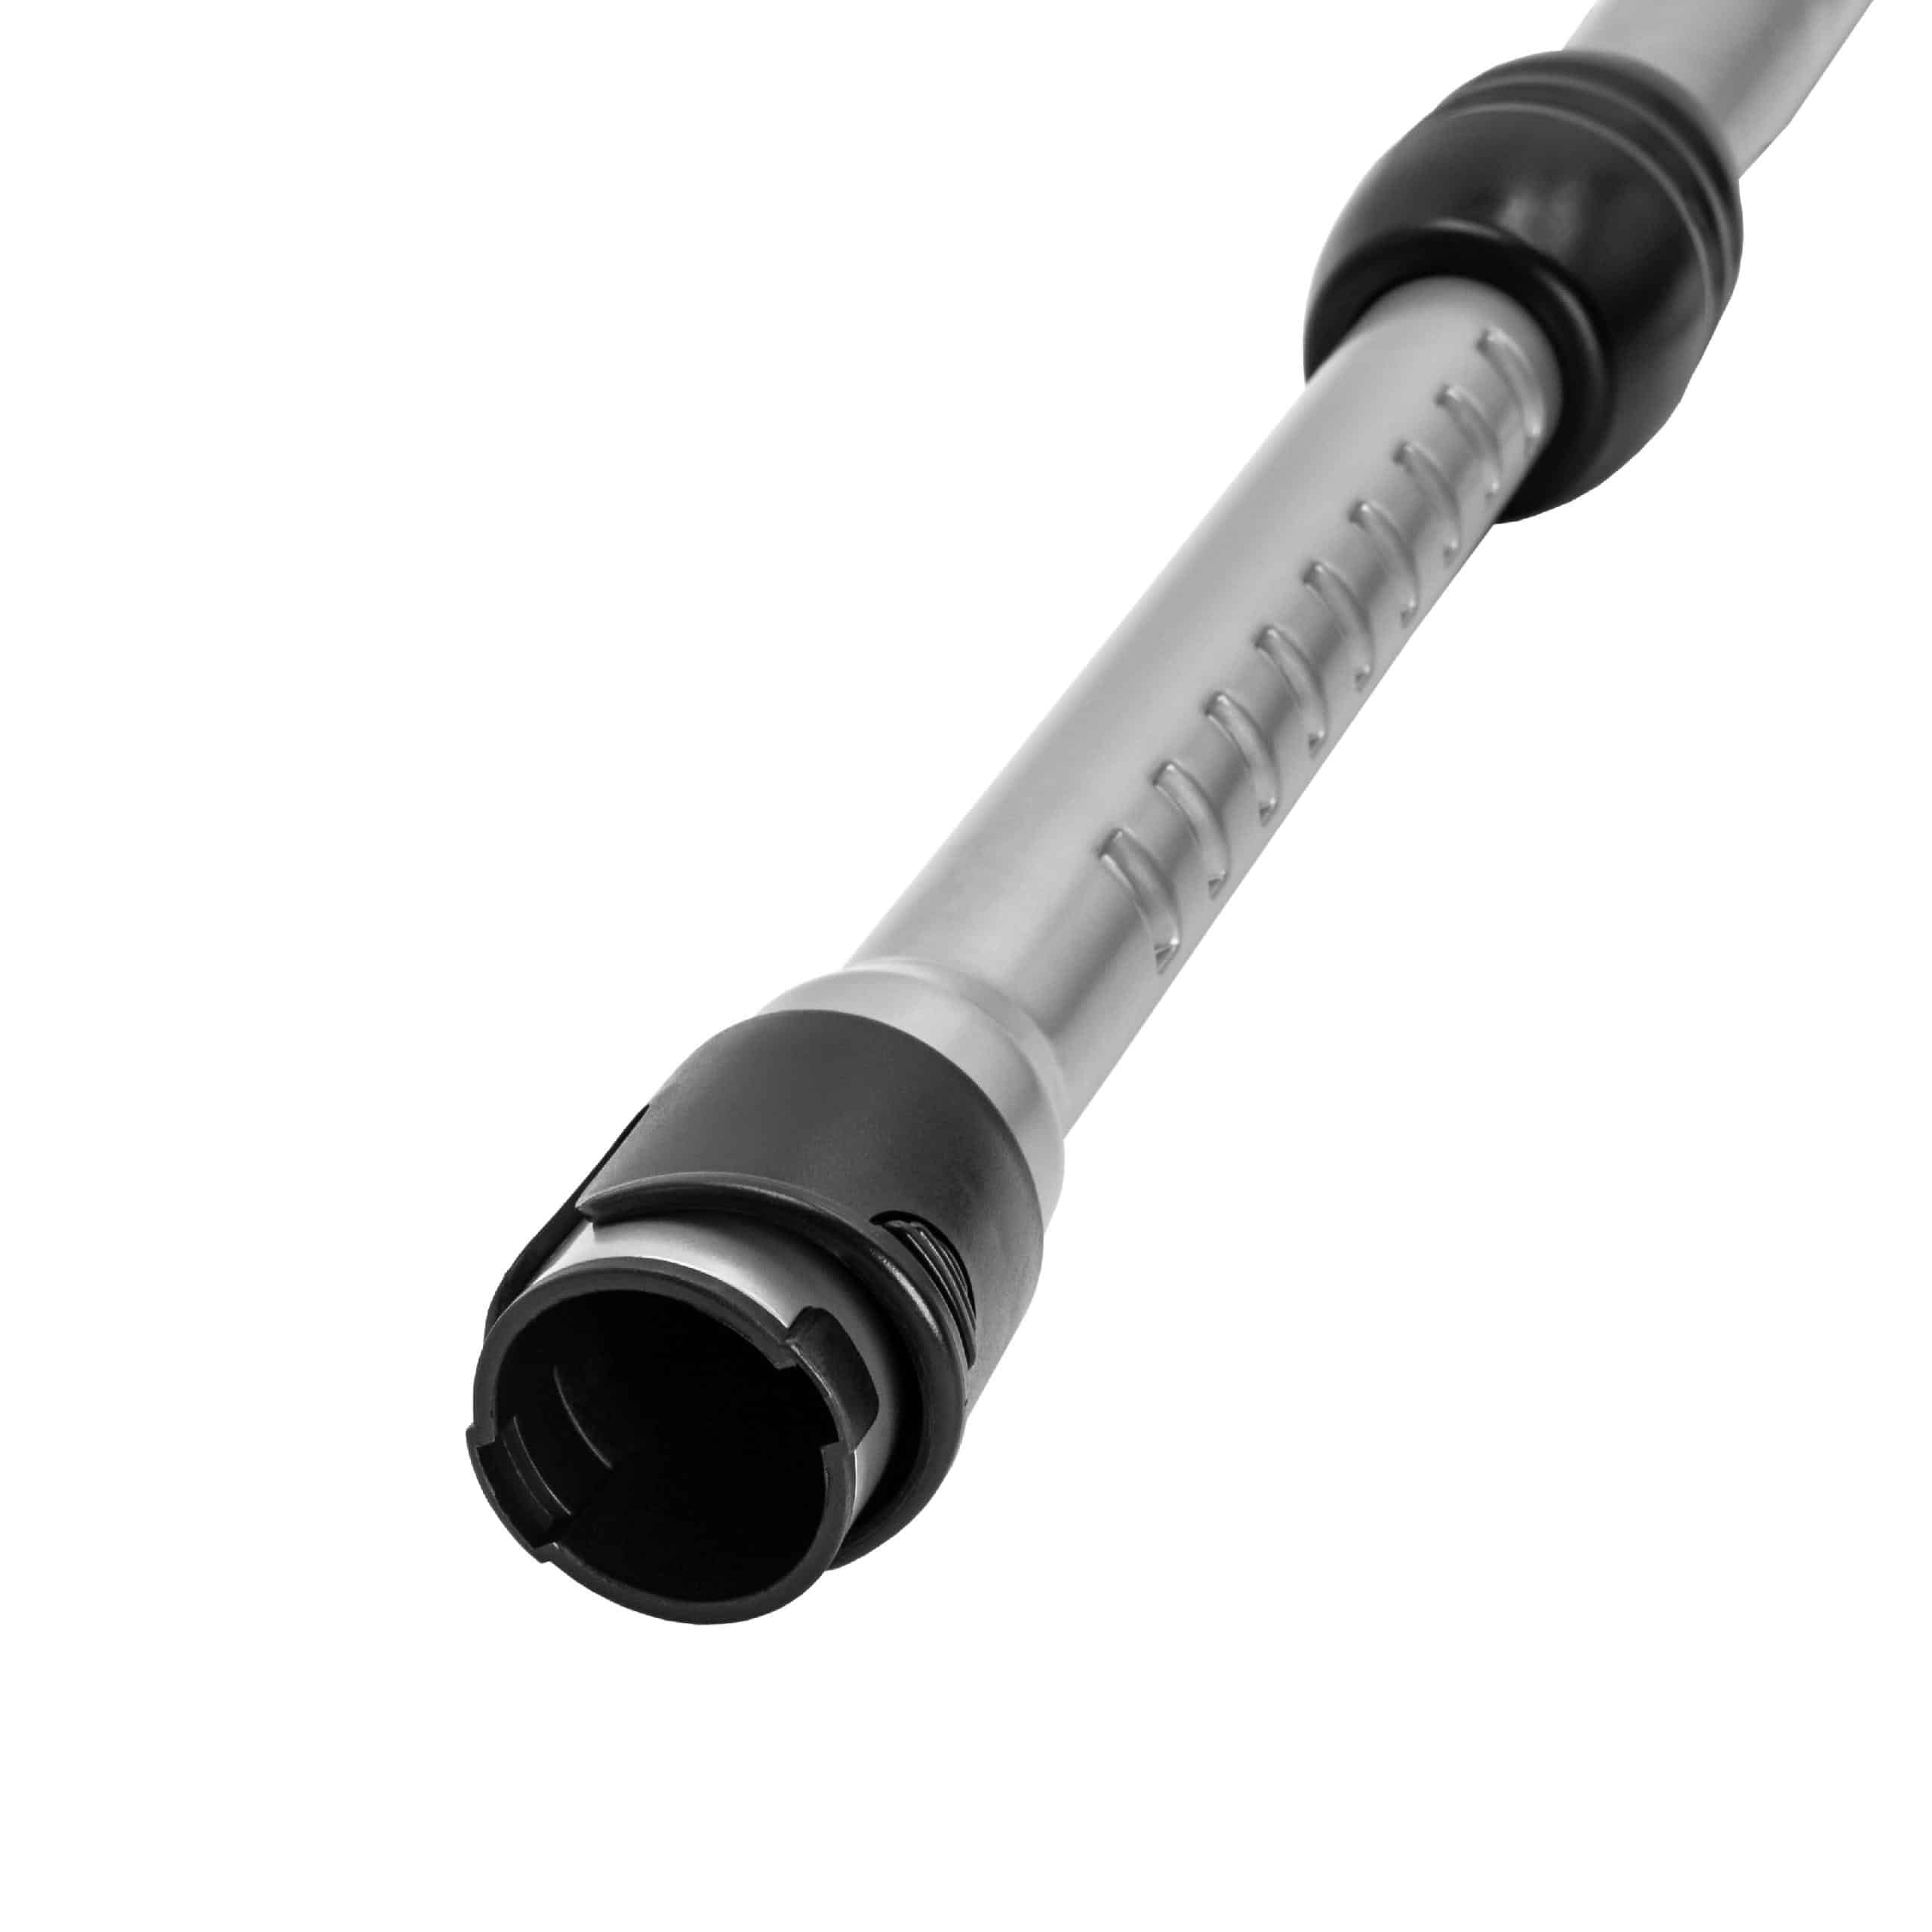 Tube for Bosch BGS4U Series / Siemens Dynapower XXL, Edition 150, VSZ31455 vacuum cleaner - Length: 61 - 99 cm